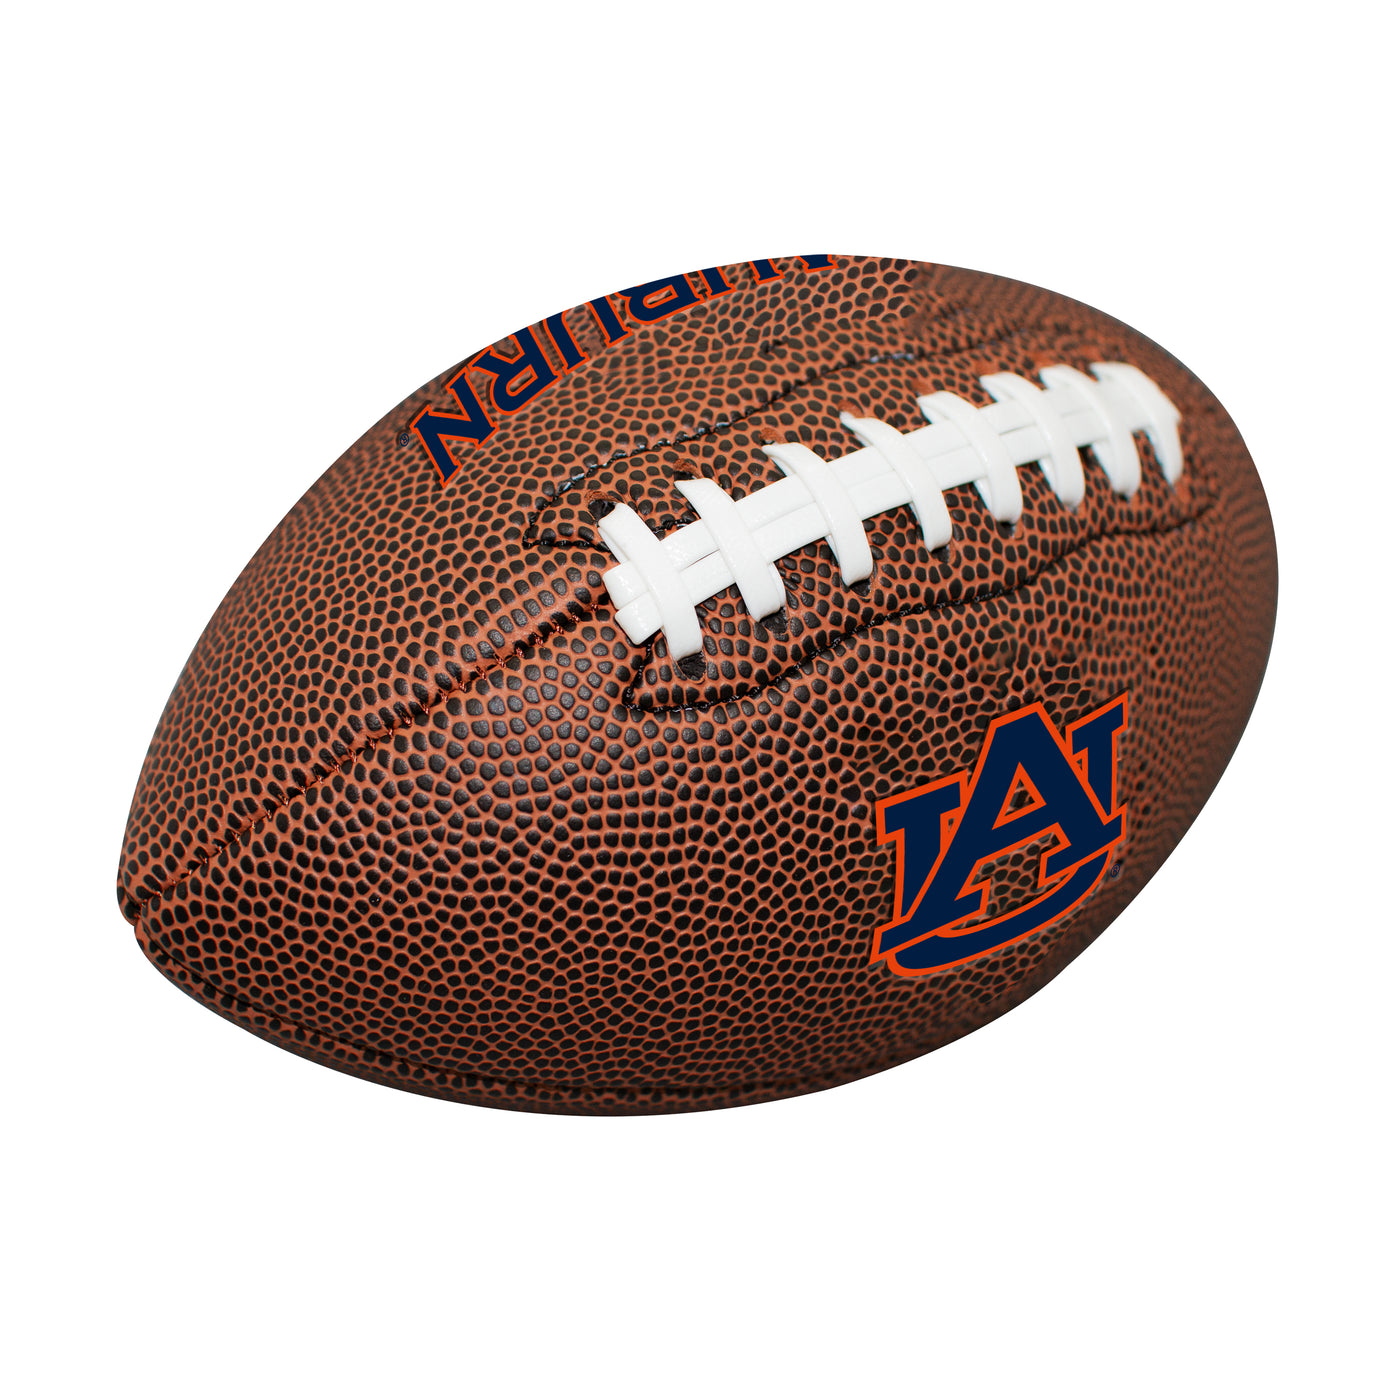 Auburn Mini Size Composite Football